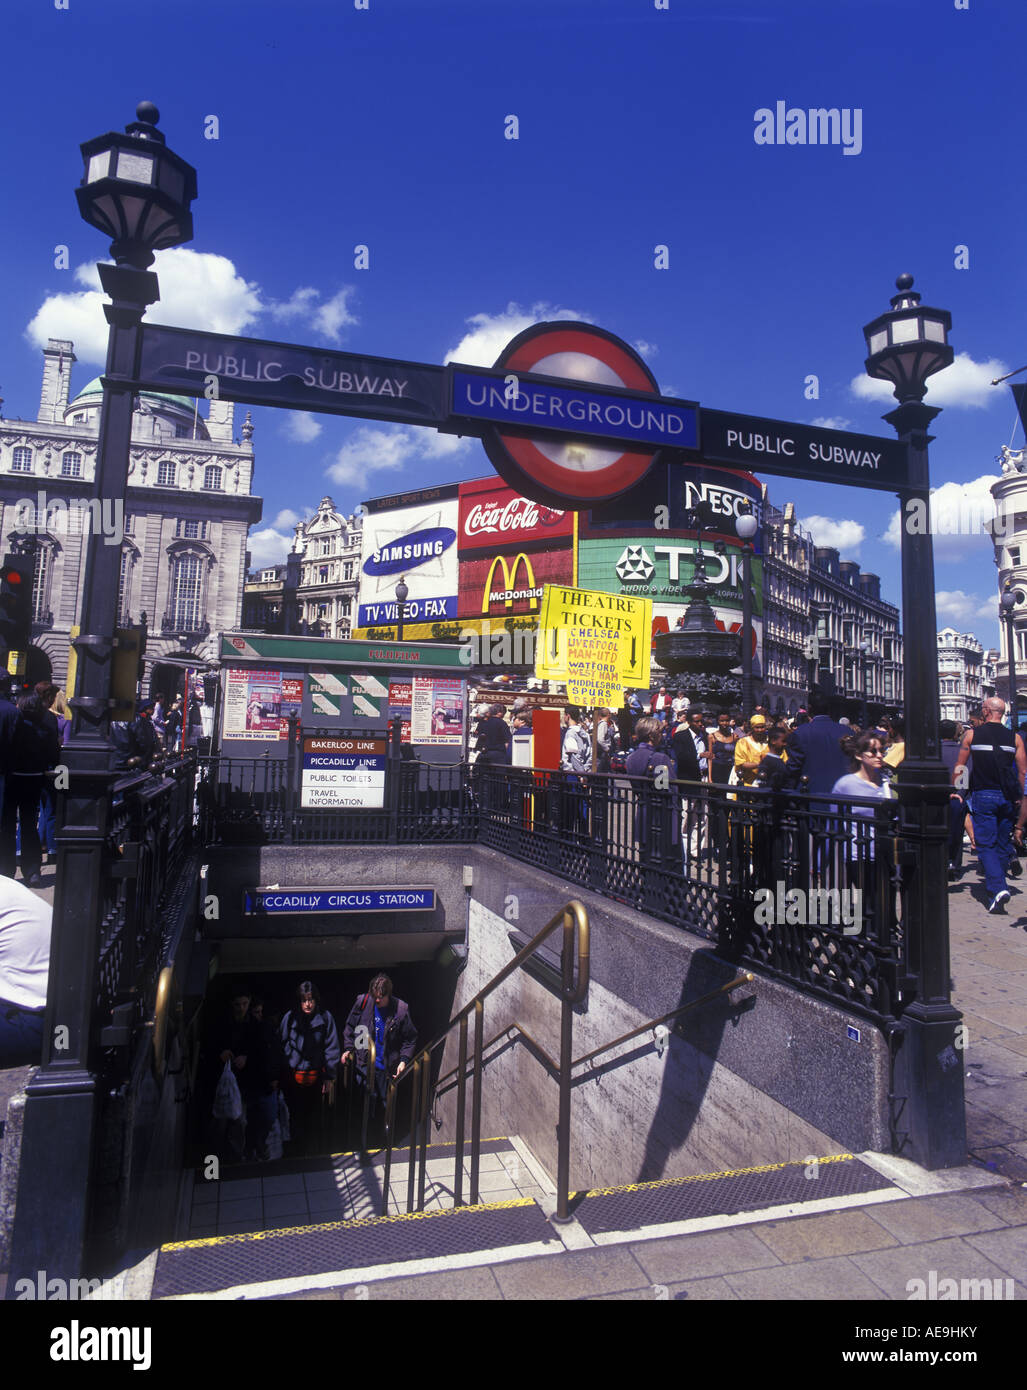 2000 HISTORICAL STREET SCENE UNDERGROUND ENTRANCE PICCADILLY CIRCUS LONDON ENGLAND UK Stock Photo